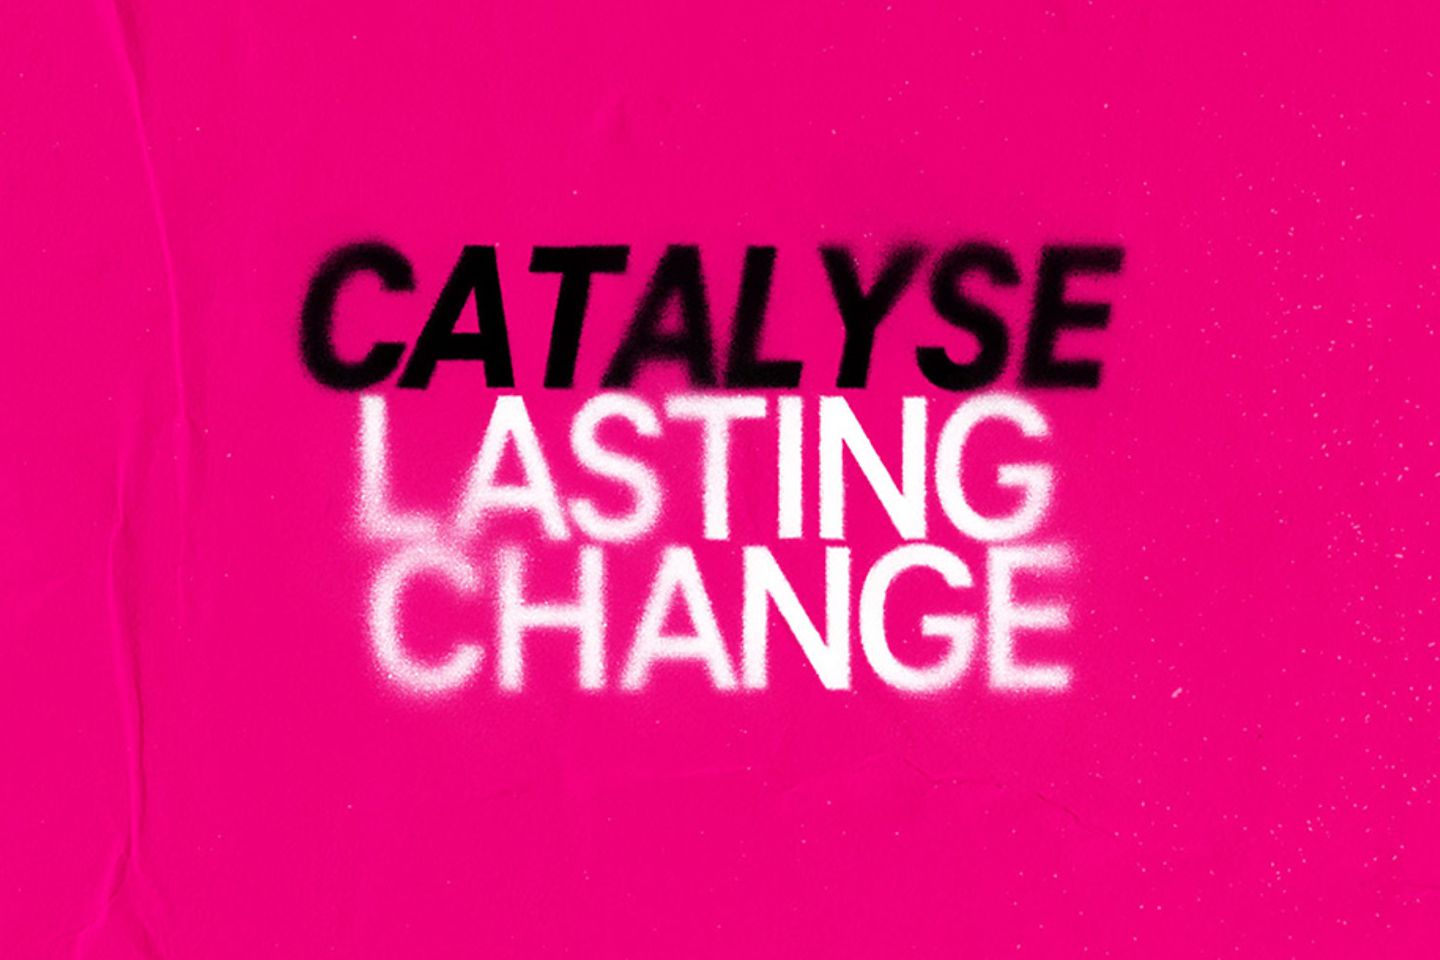 Schriftzug "Catalyse lasting change"